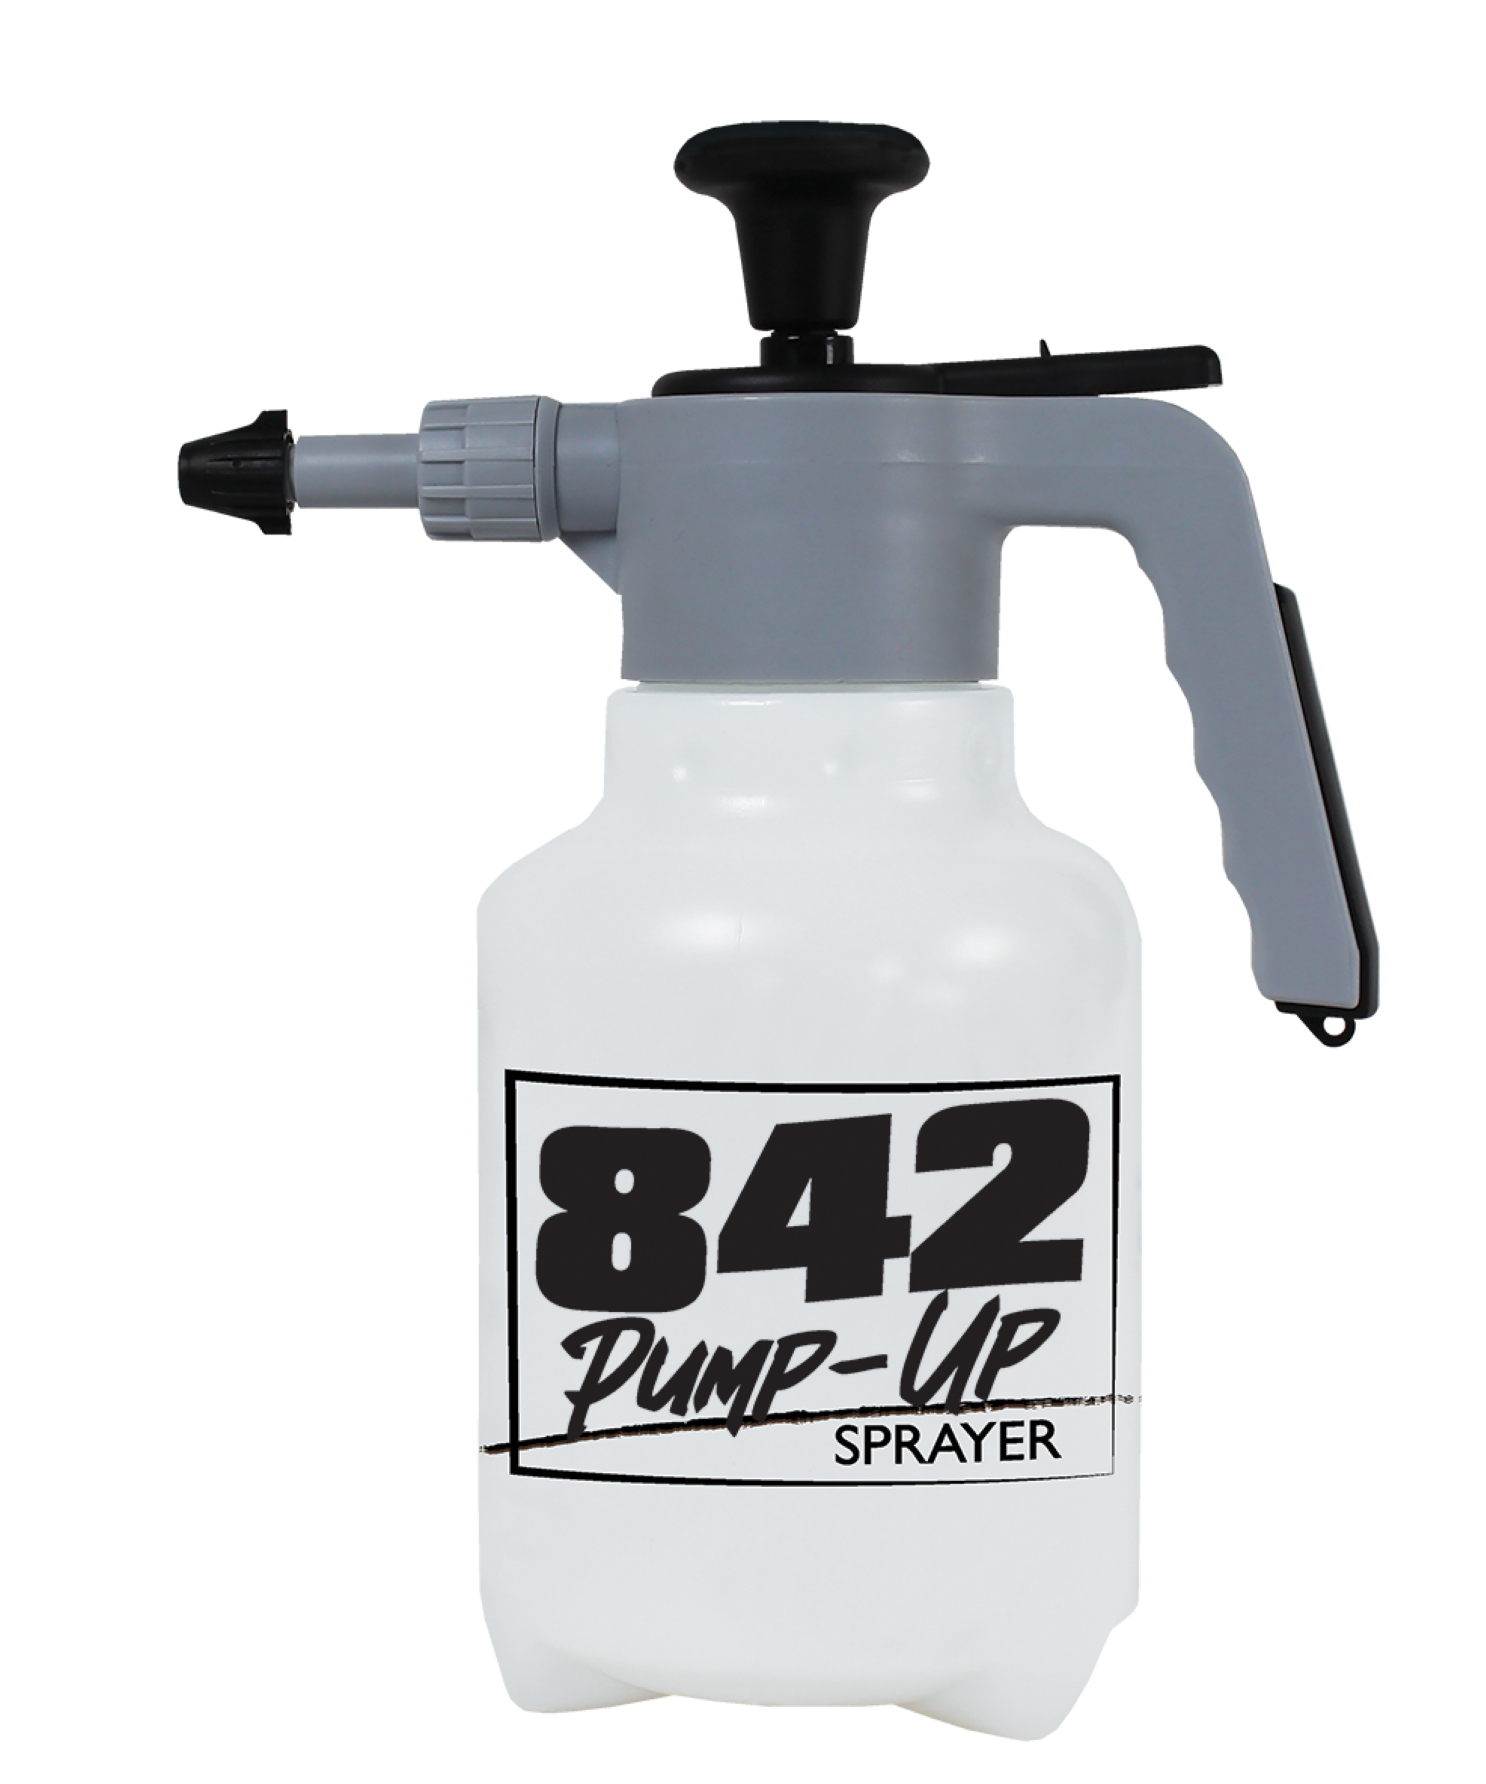 Pump Sprayer 1.6 Quart